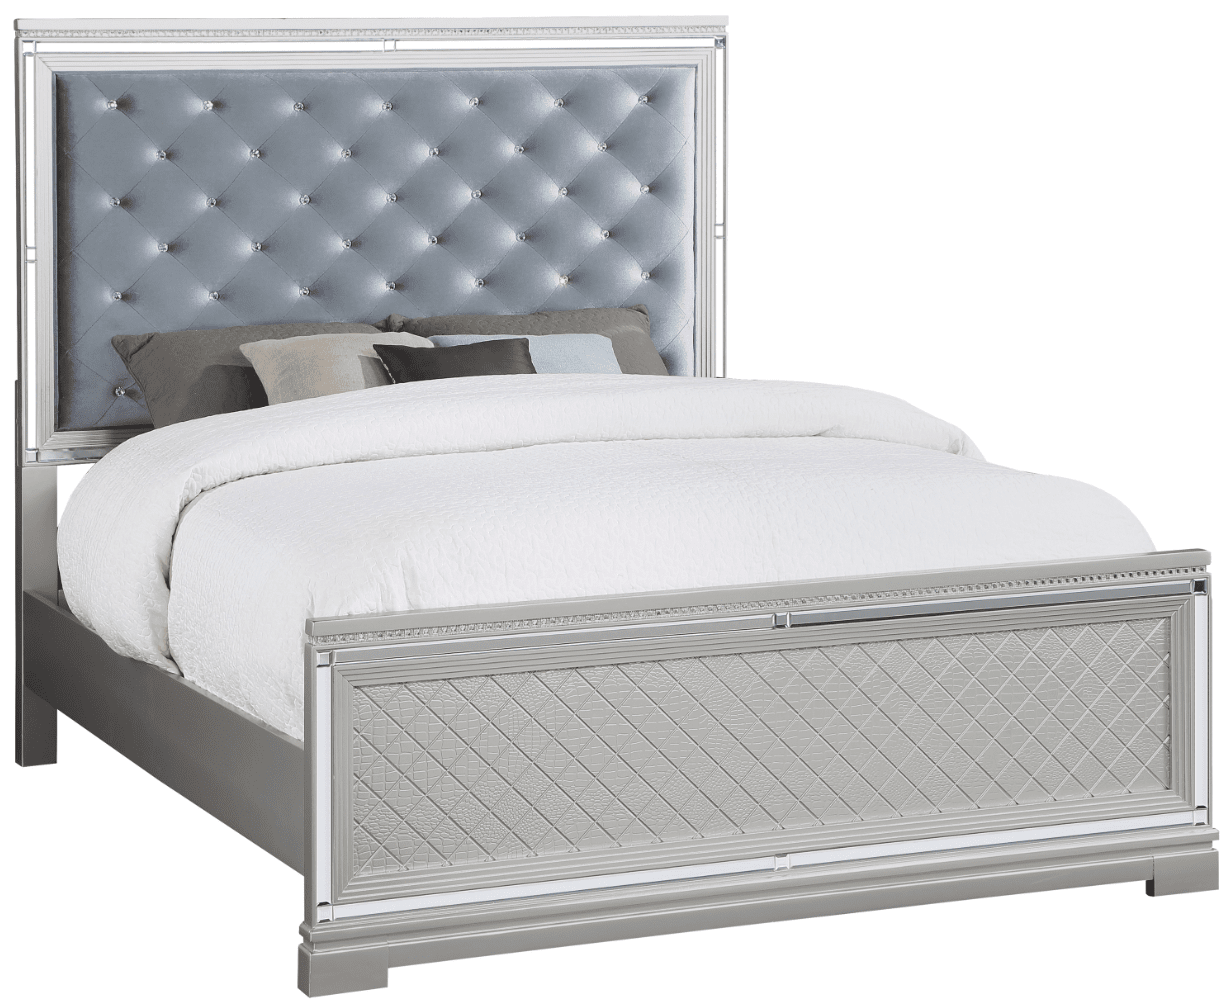 Eleanor King Size Glam Bedroom Set - Metallic